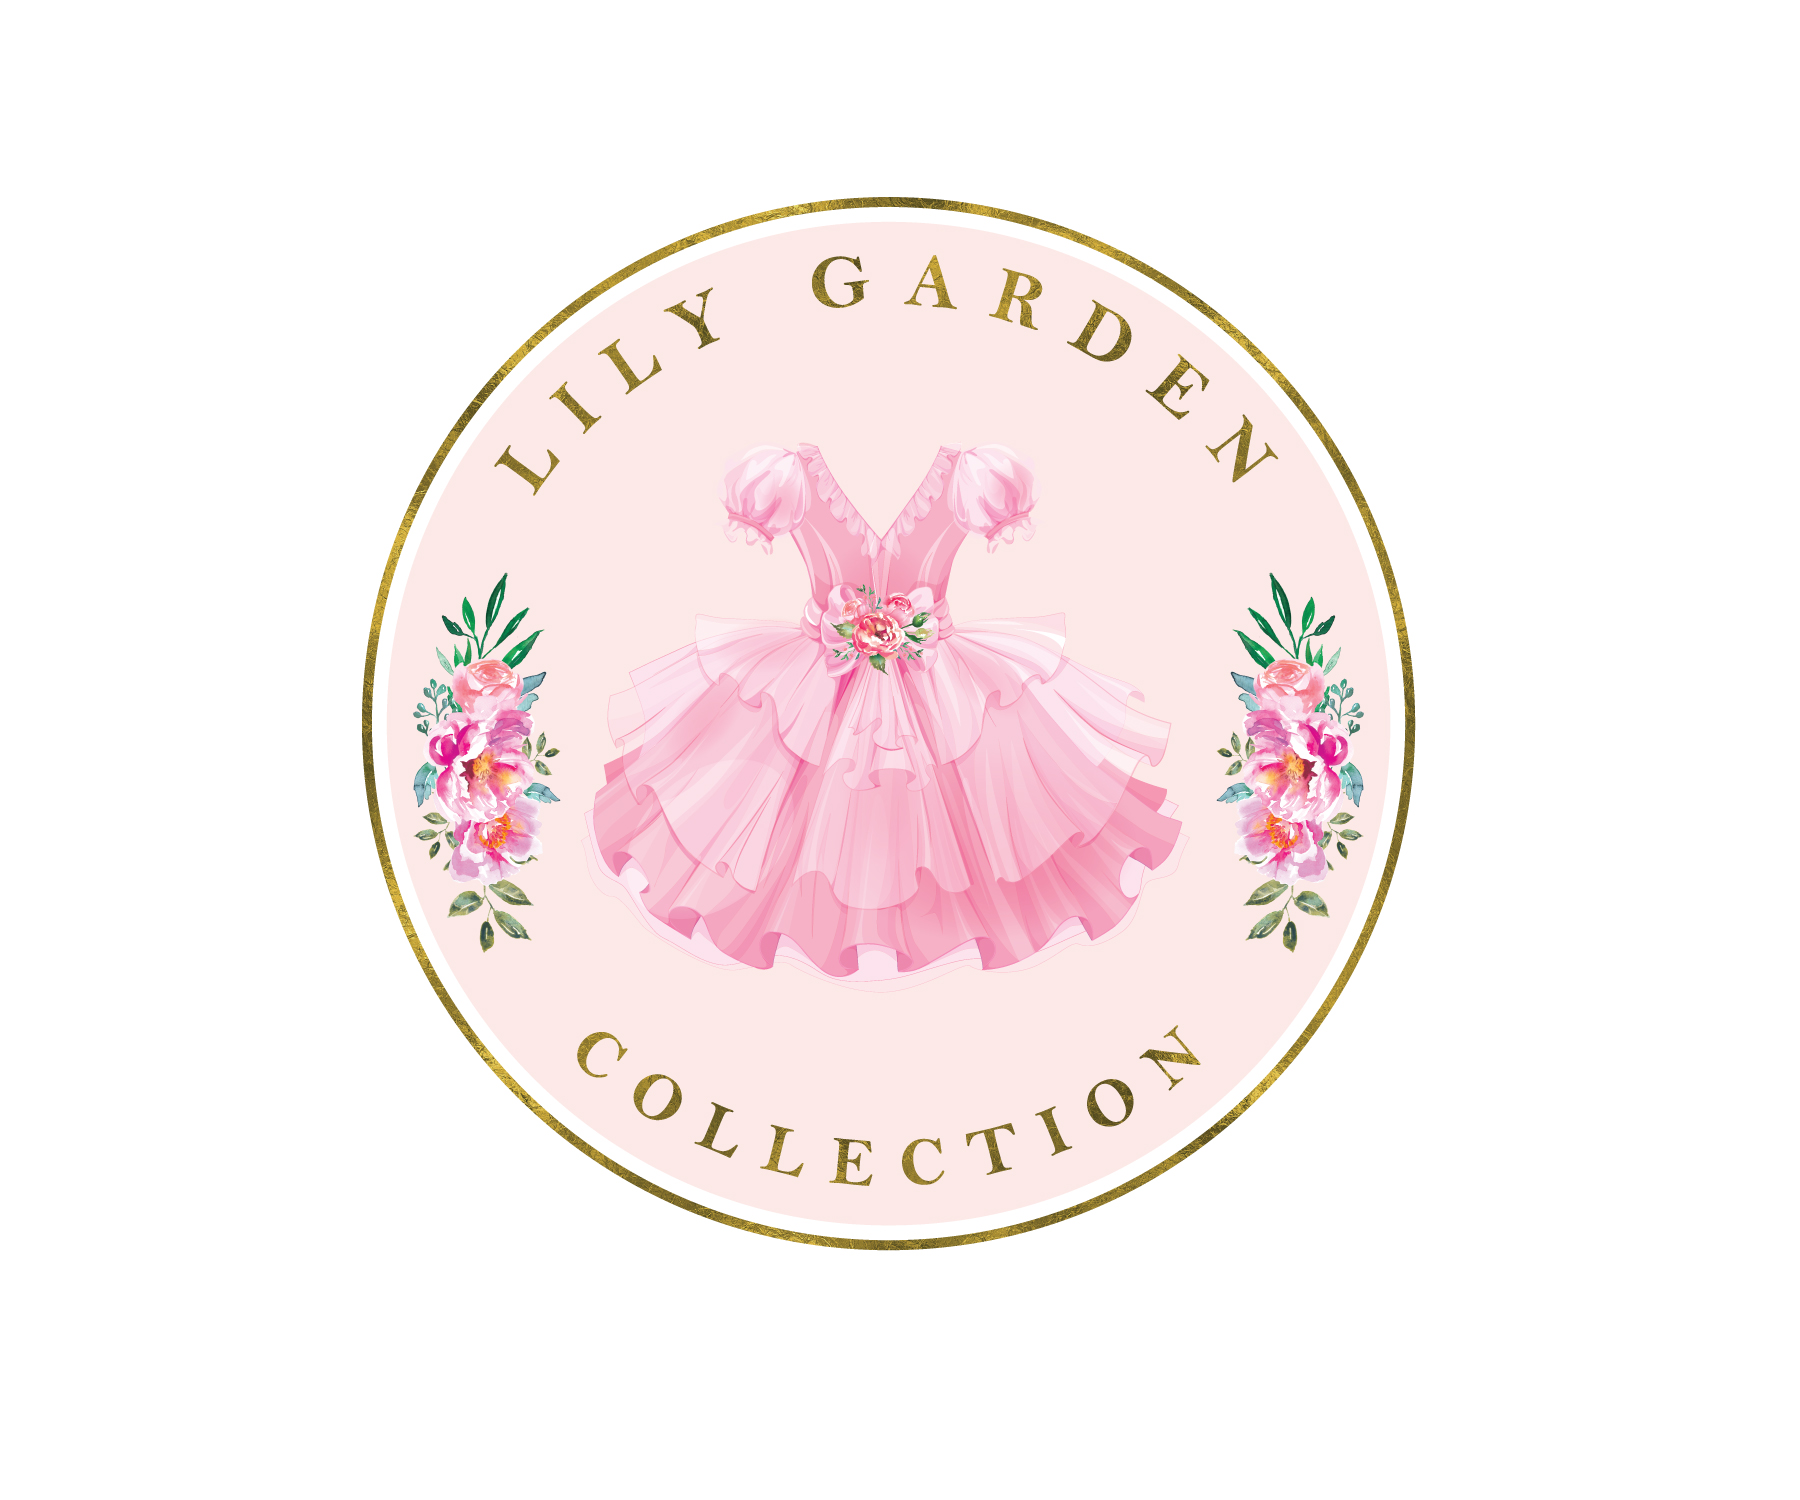 Lily.garden1.ae